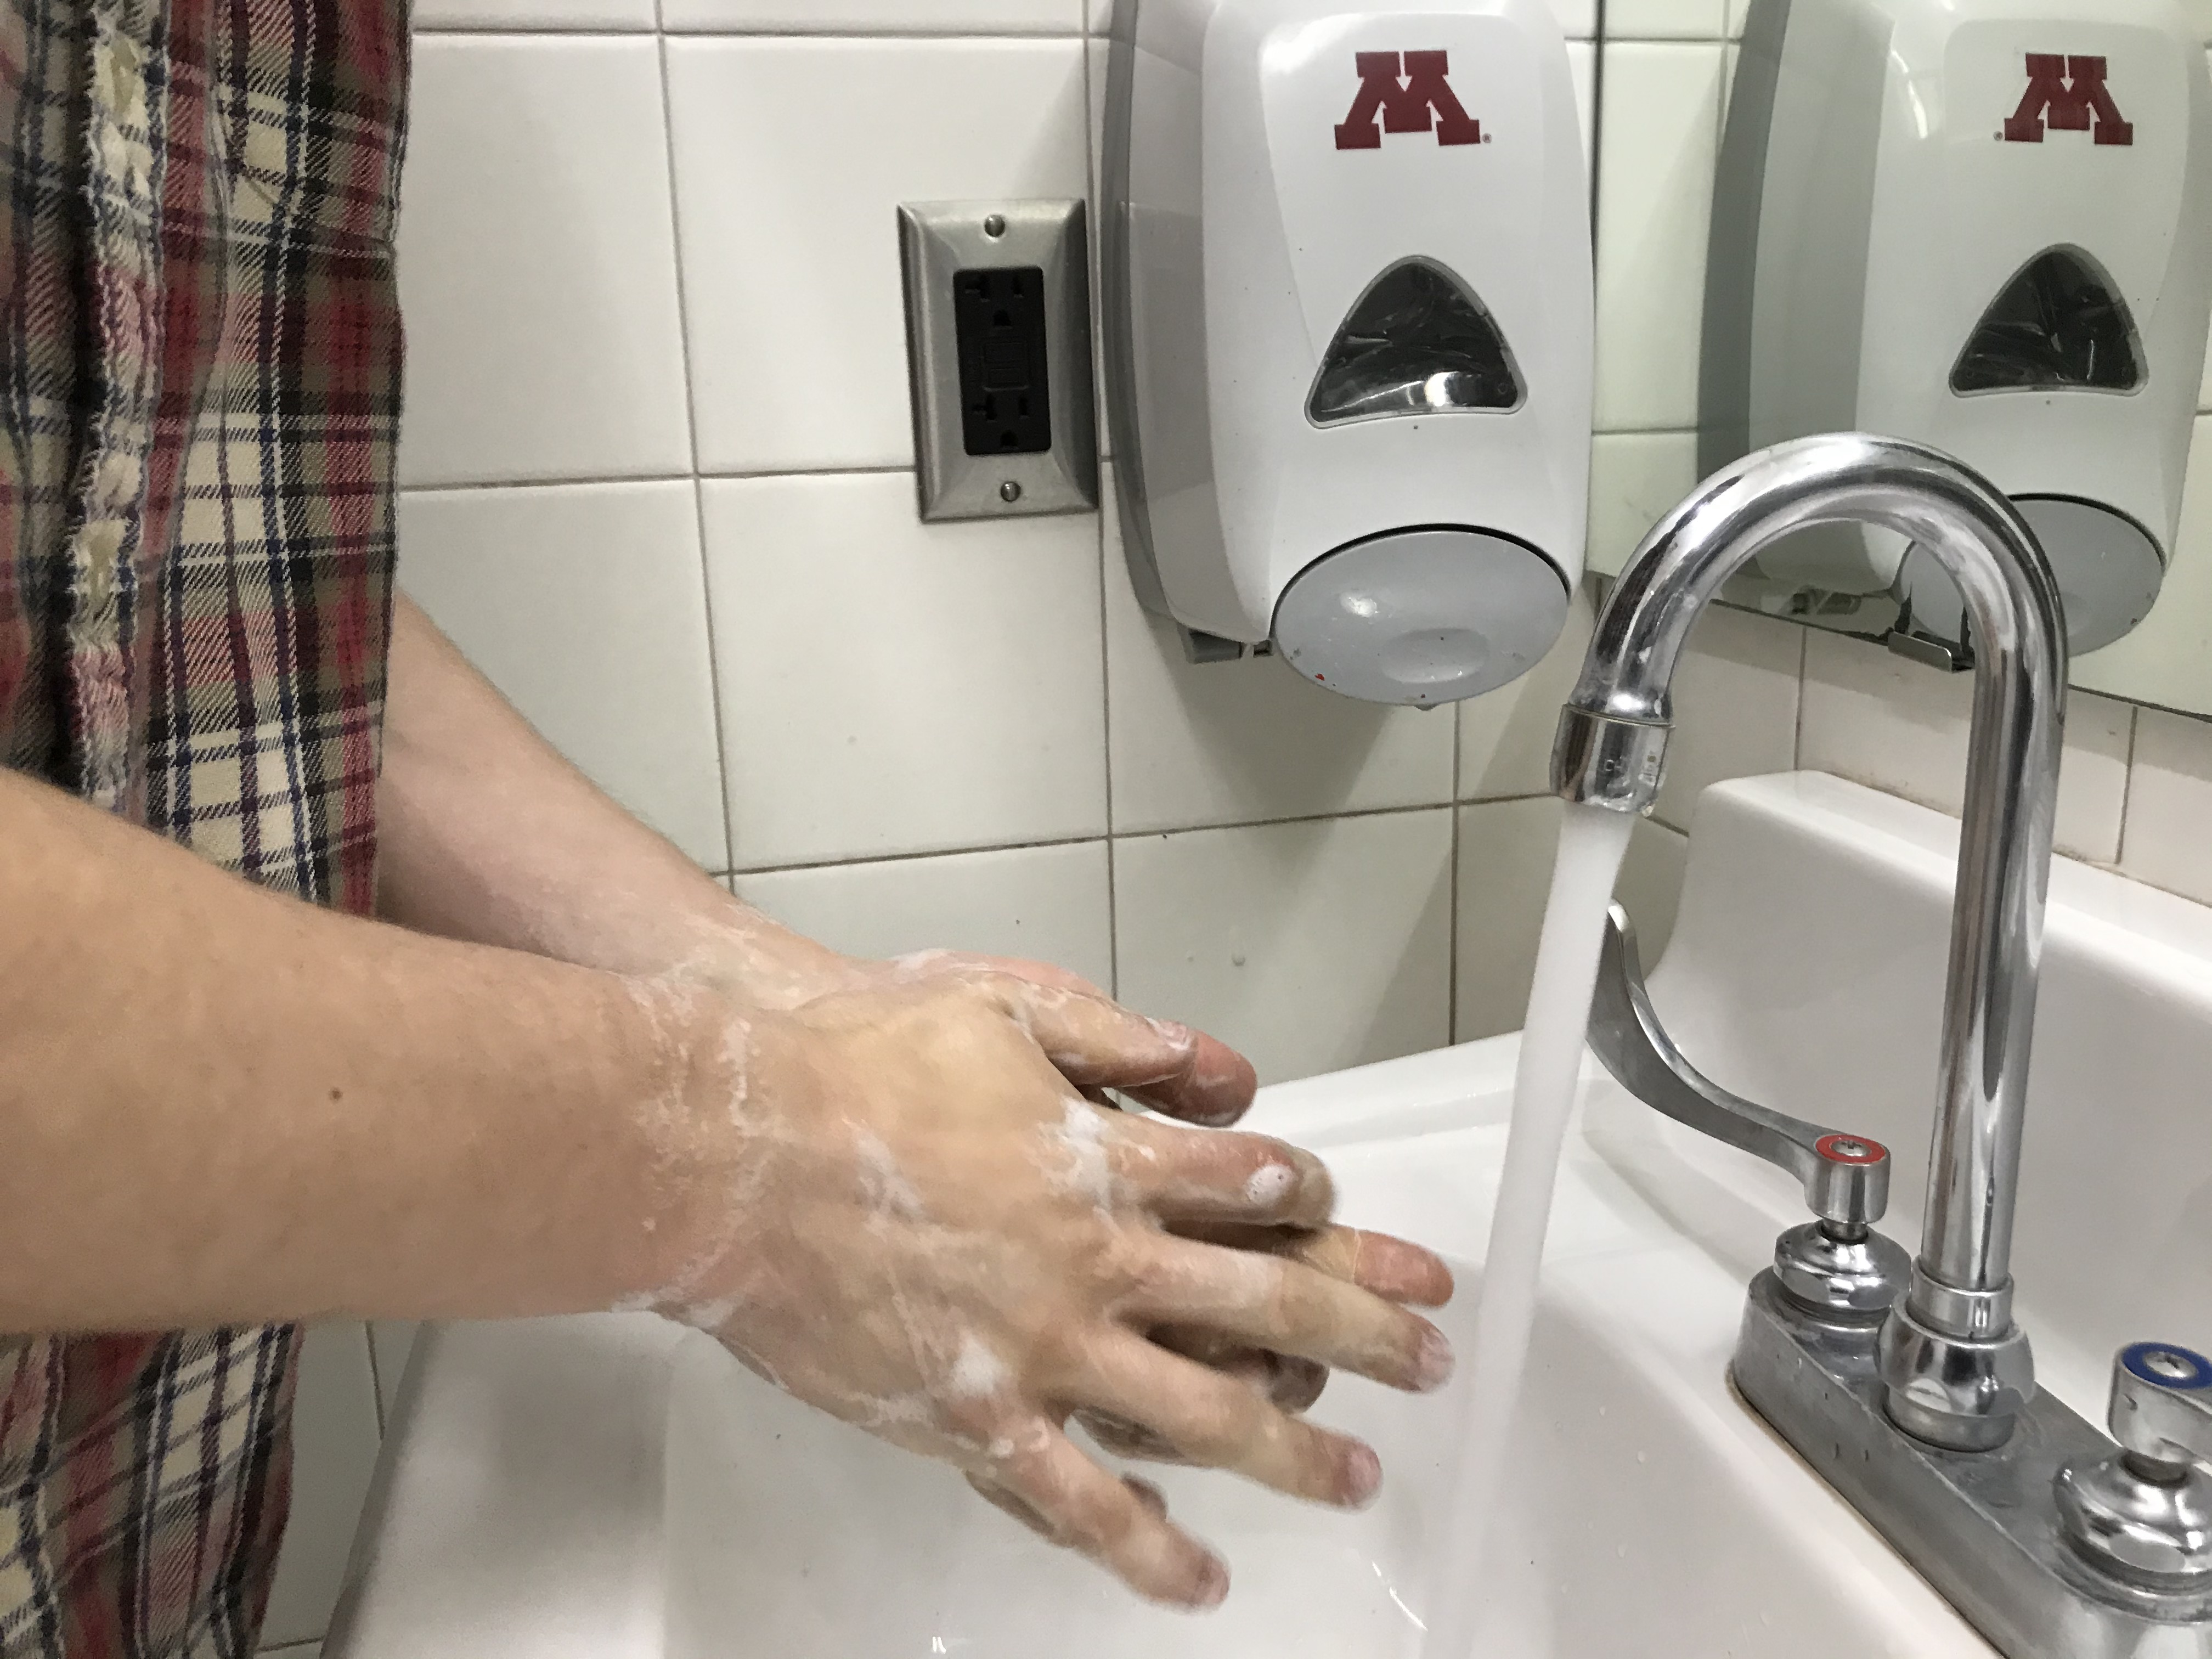 Hand washing with UMN logo on soap dispenser